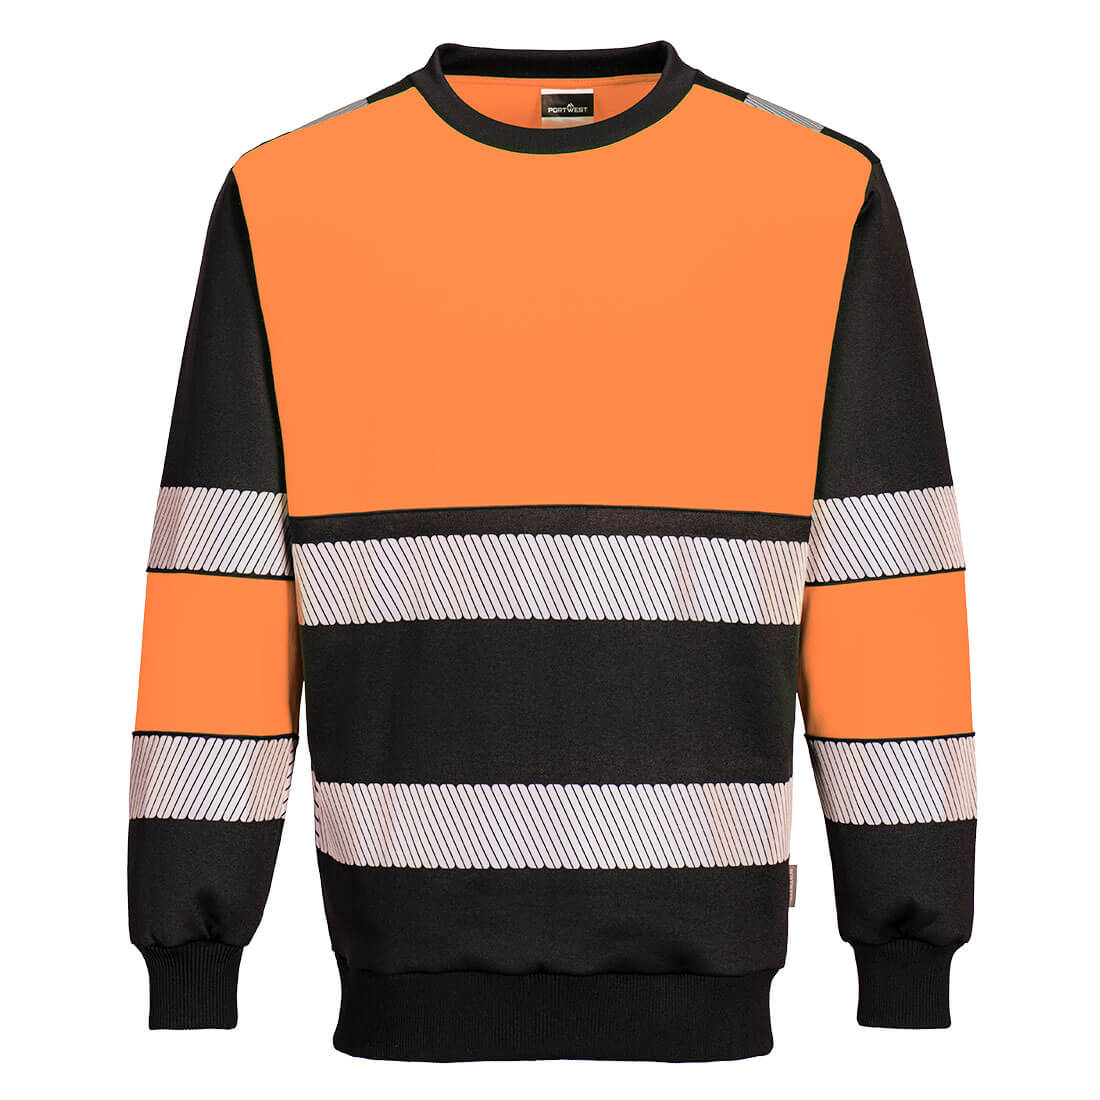 PW3 Hi-Vis Class 1 Sweatshirt PW376 Orange/Black Size XXL Fit R